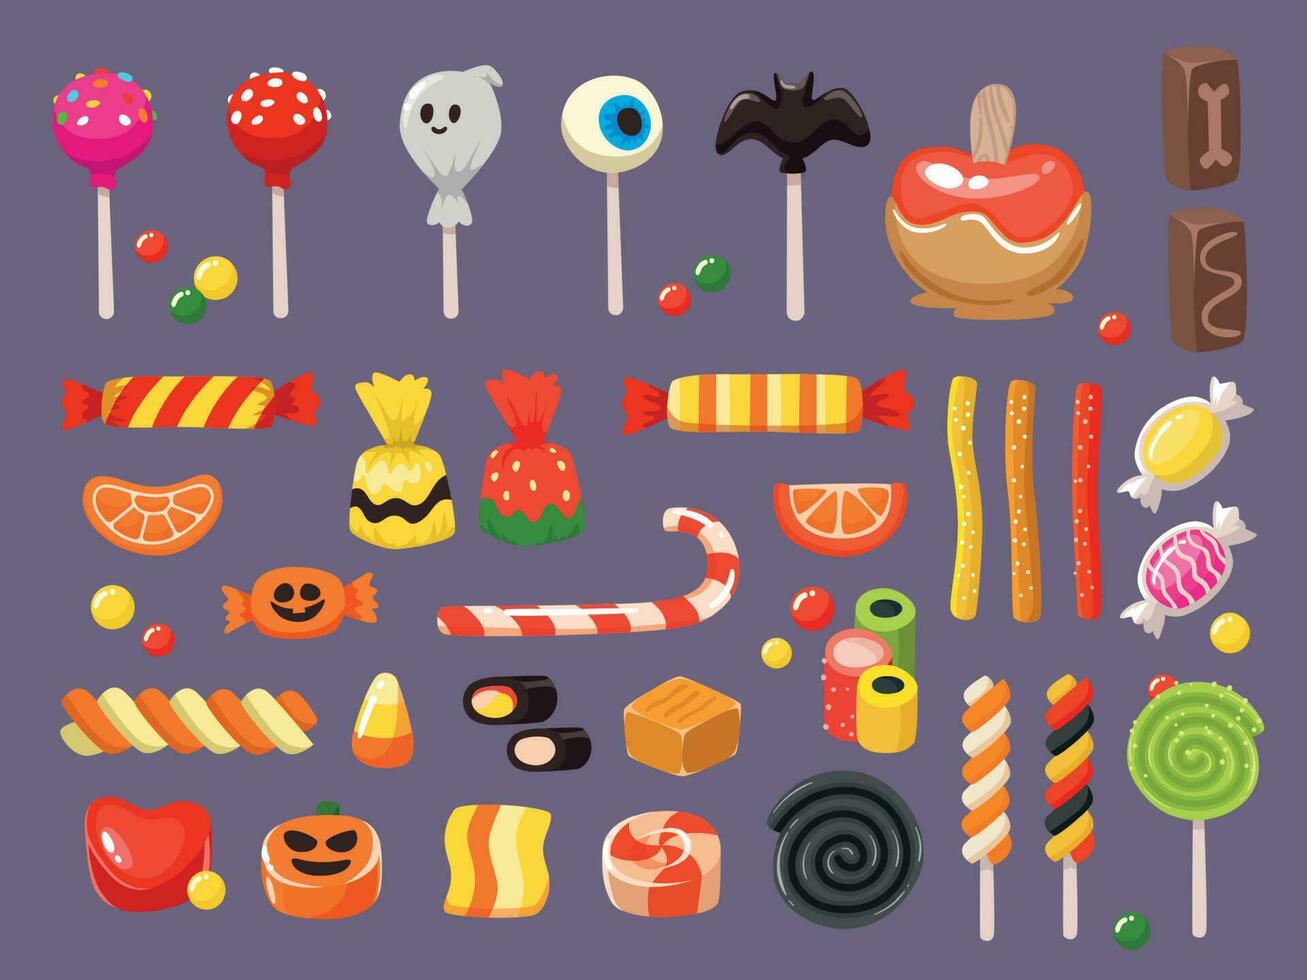 halloween snoep. zoet snoepjes, eng knuppel lolly en snoepgoed zoethout butterscotch vector illustratie reeks